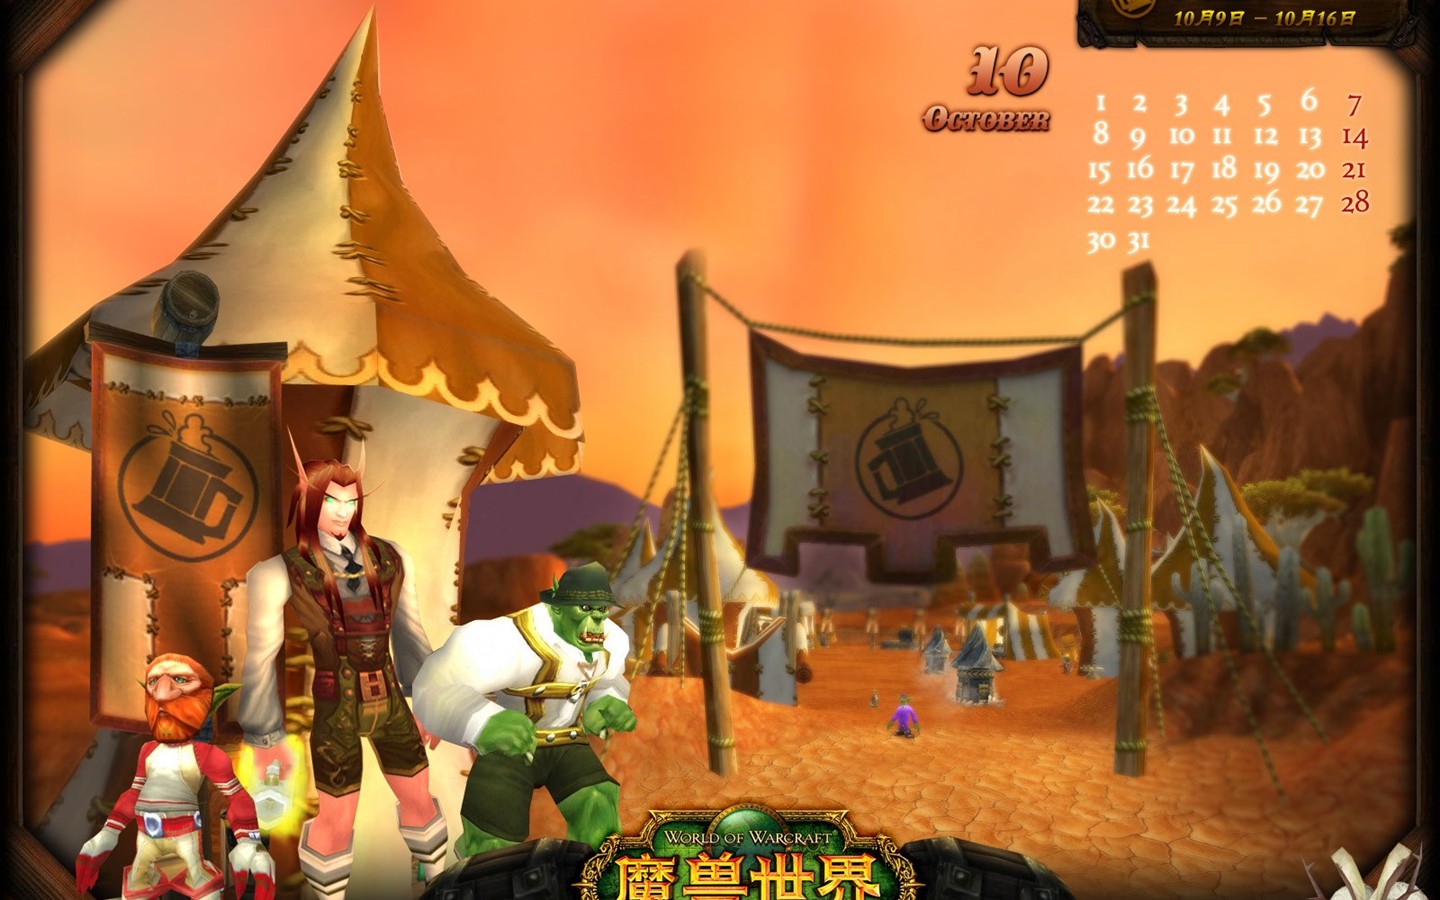 World of Warcraft: Fond d'écran officiel de Burning Crusade (1) #31 - 1440x900